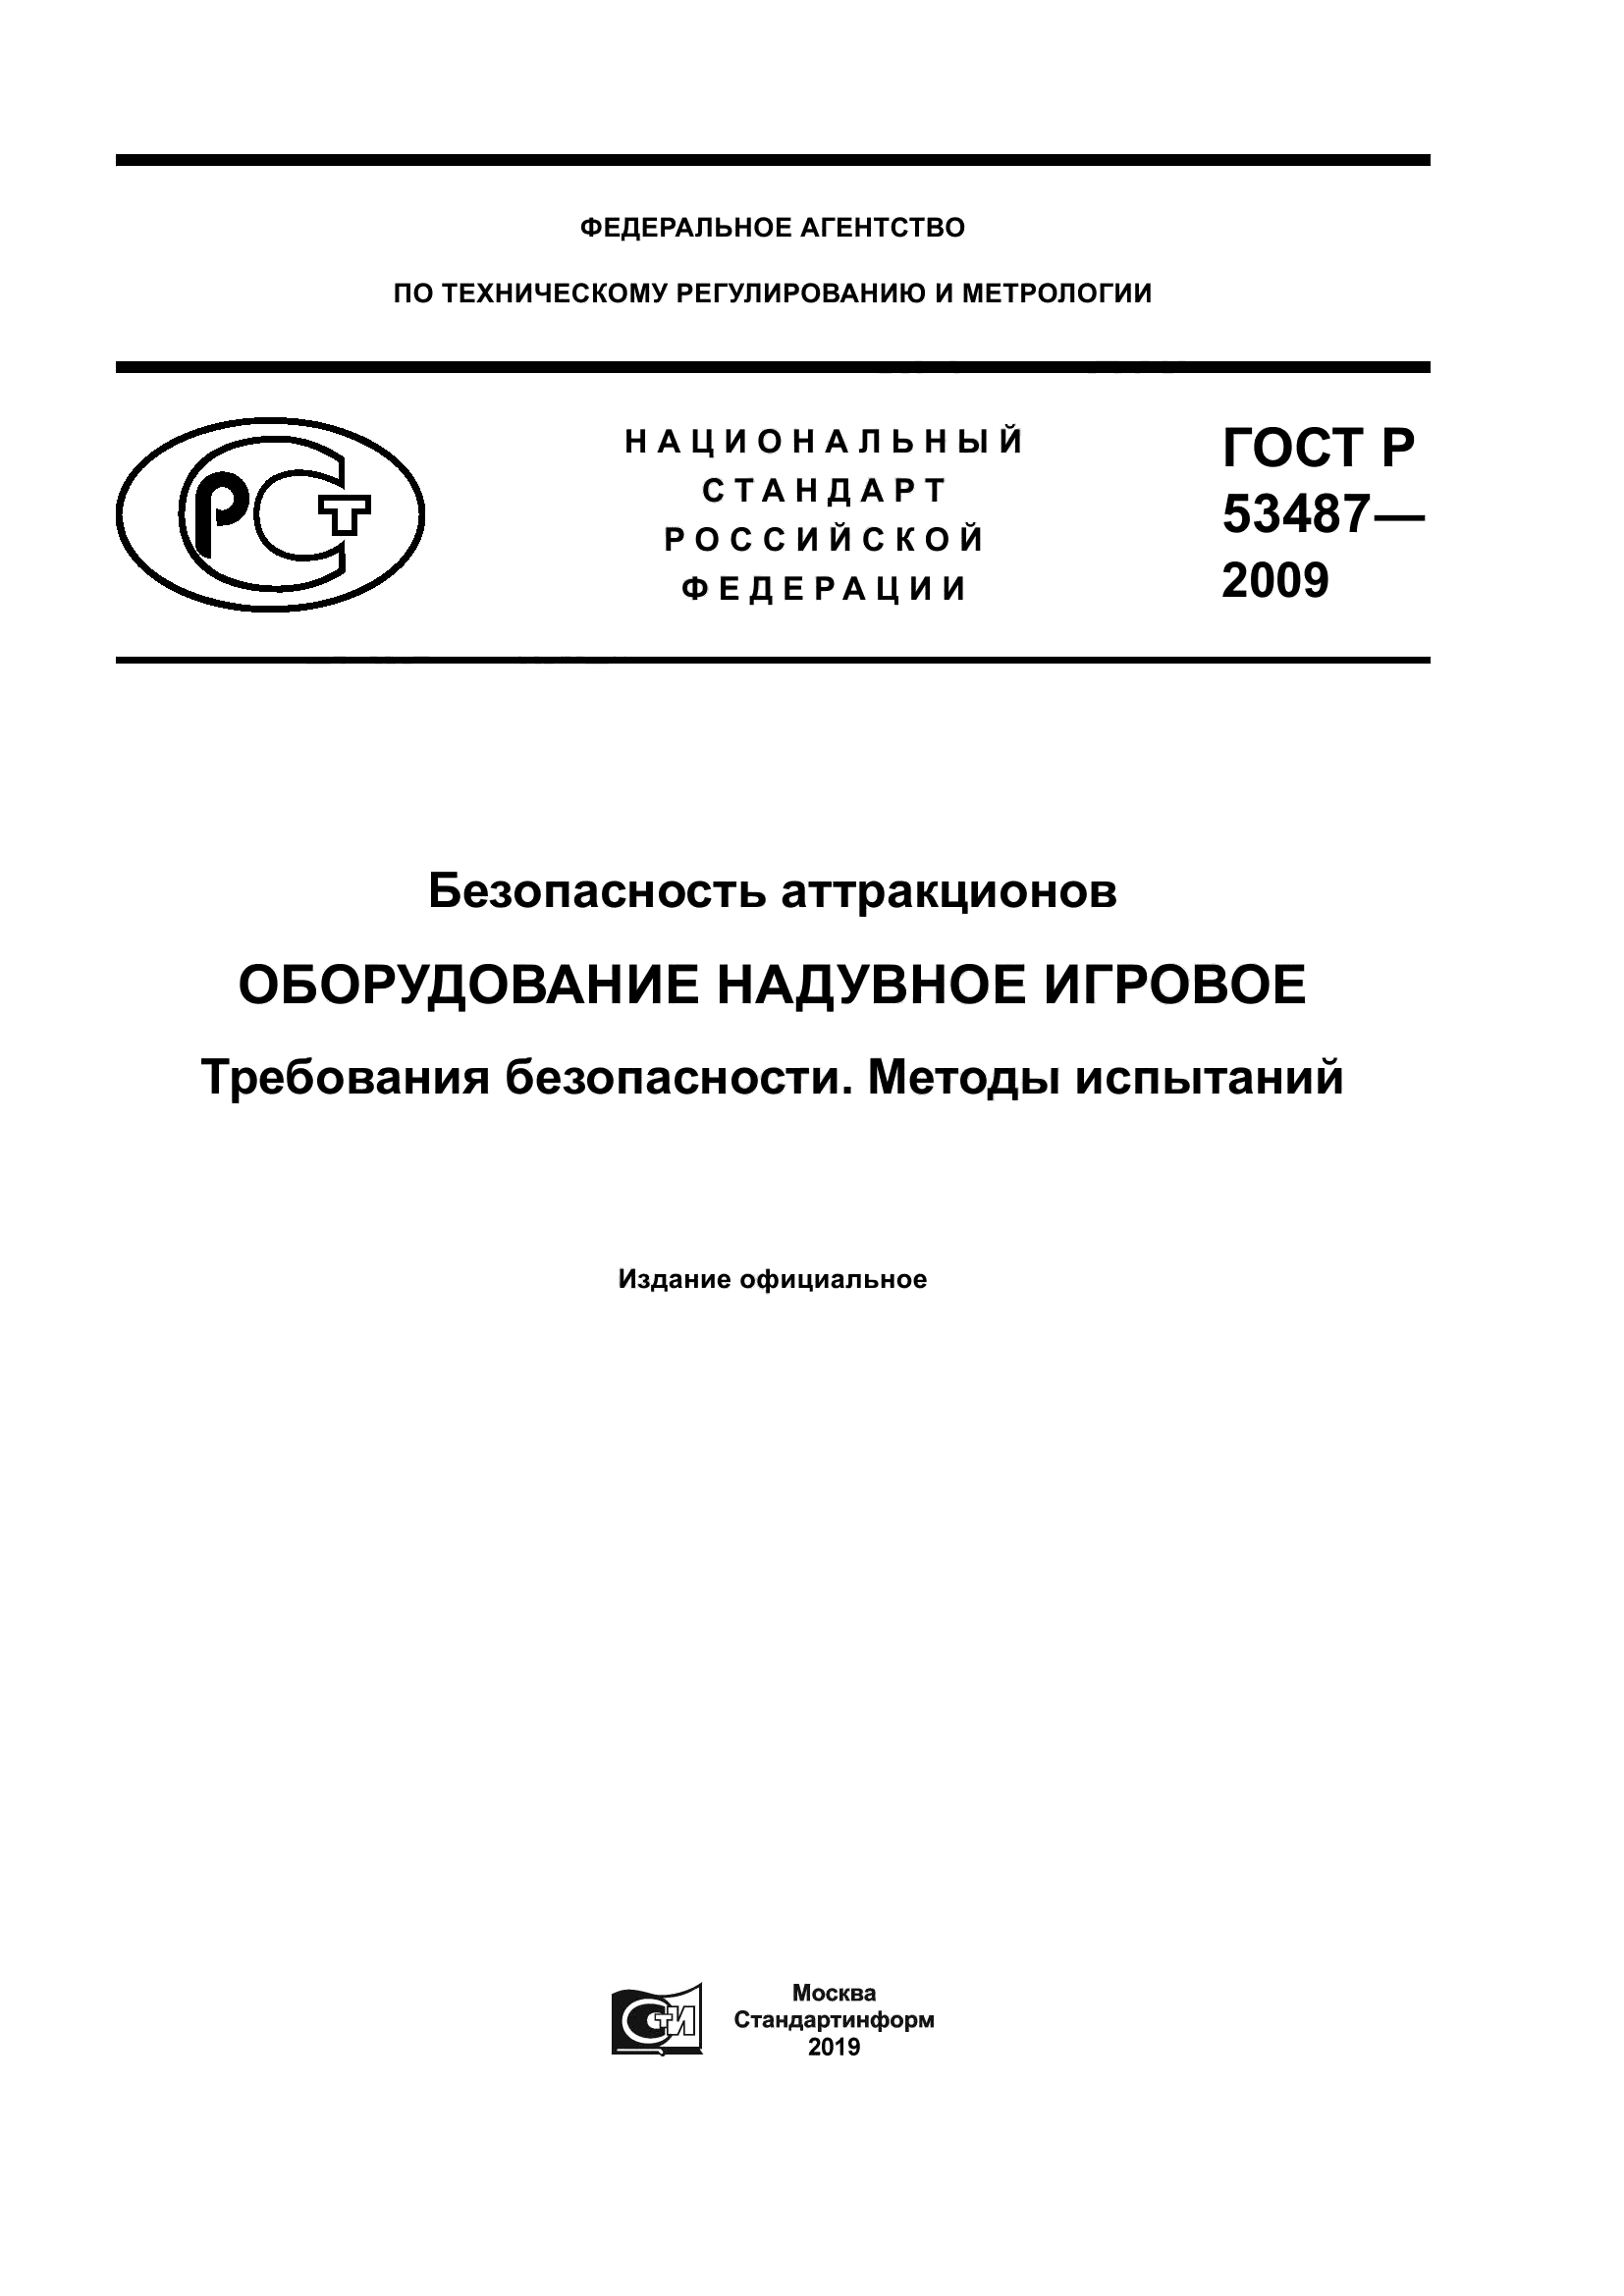 ГОСТ Р 53487-2009